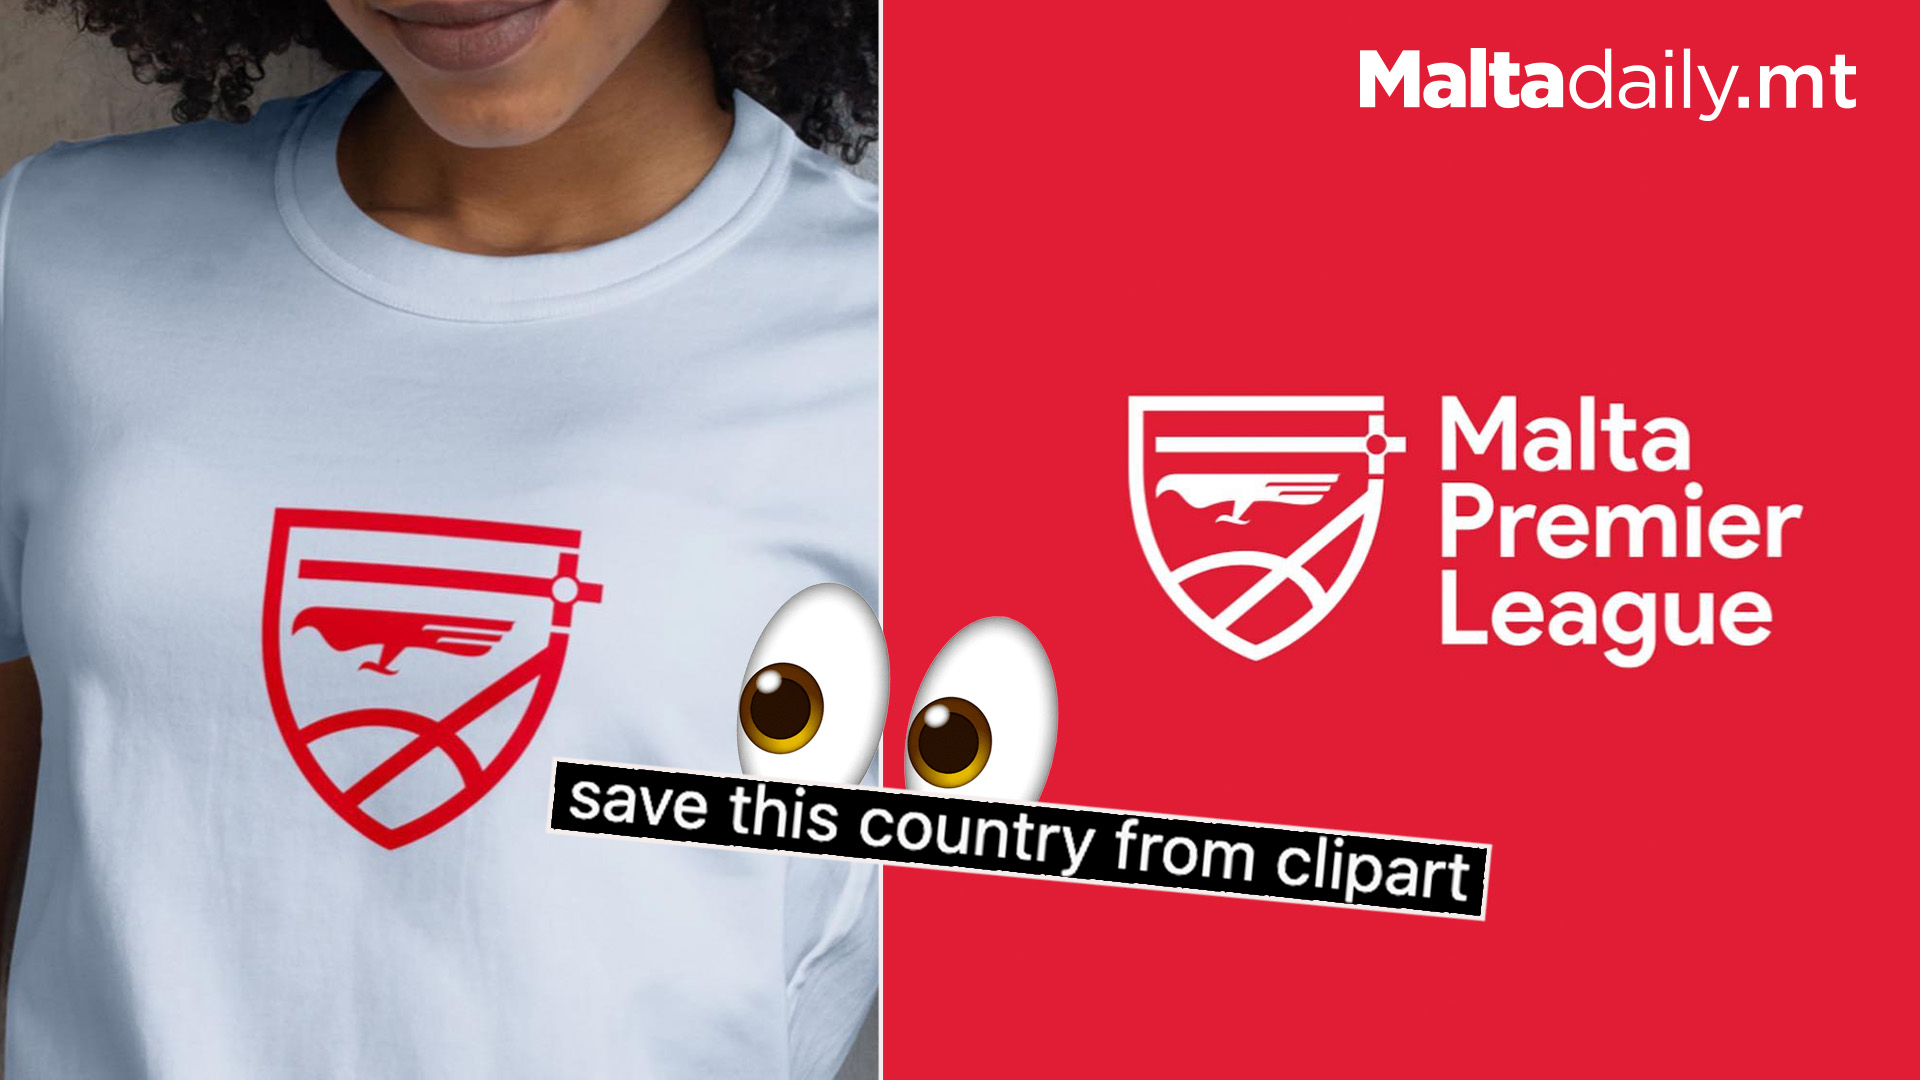 Designer Shares Malta Premier League Logo Not Shortlisted